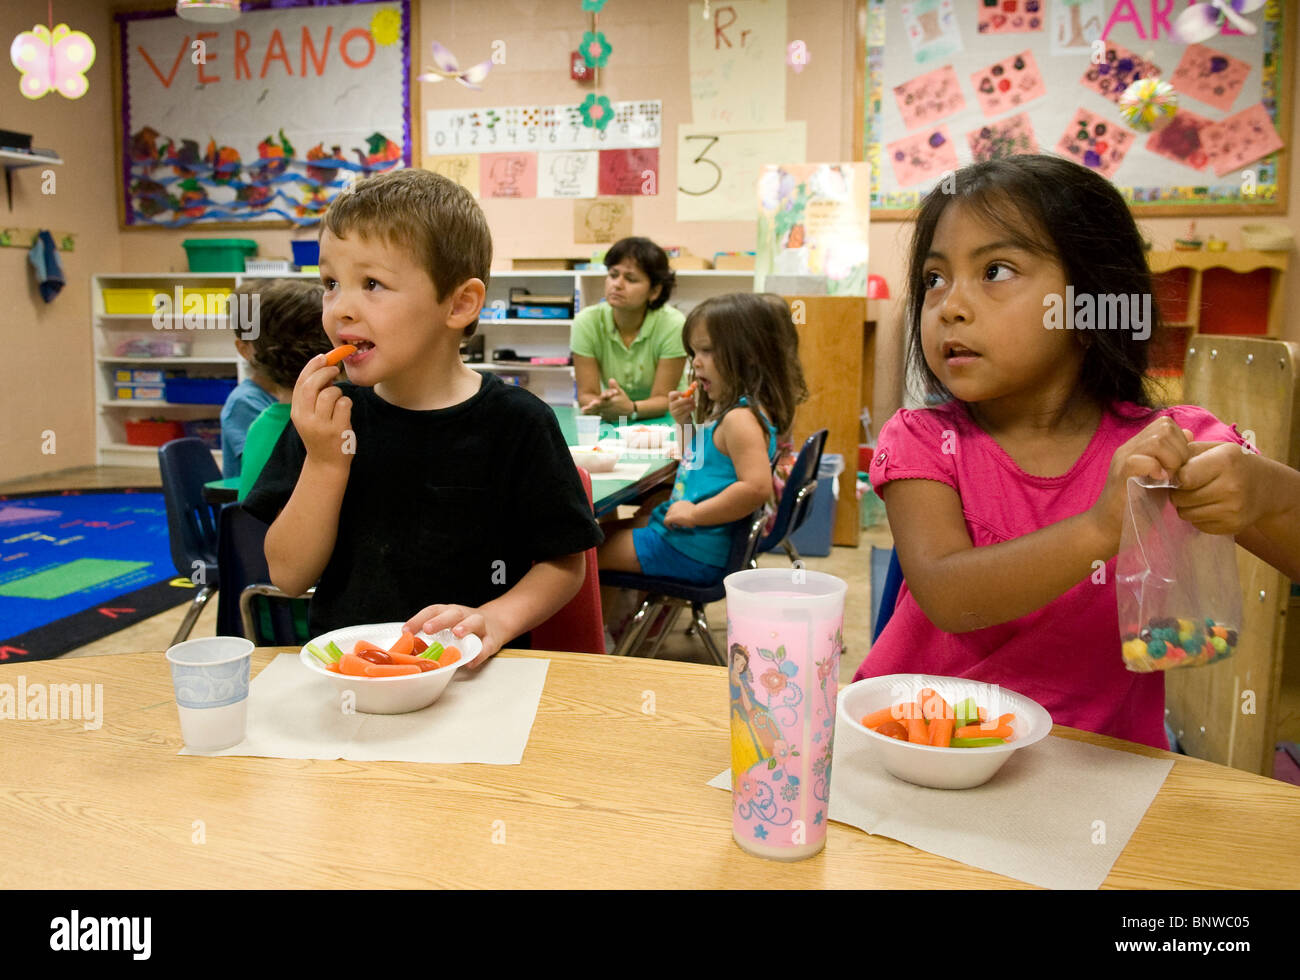 Hispanic pre-kindergarten age children eat snacks at pre-school. Girl eats sugary cereal while boy eats heathly carrots Stock Photo